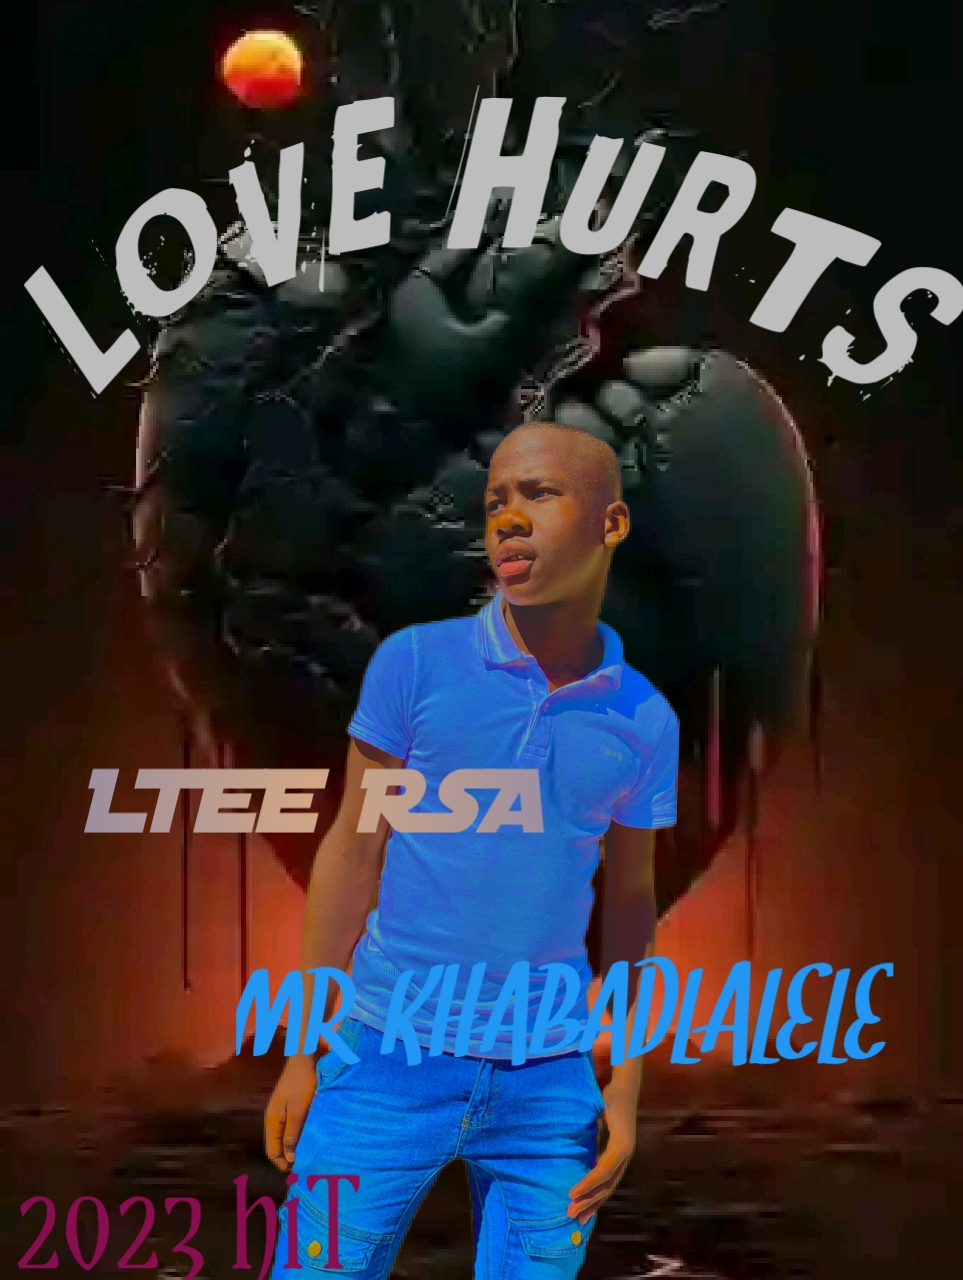 LOVE HURTS - Ltee Mr khabadlalele